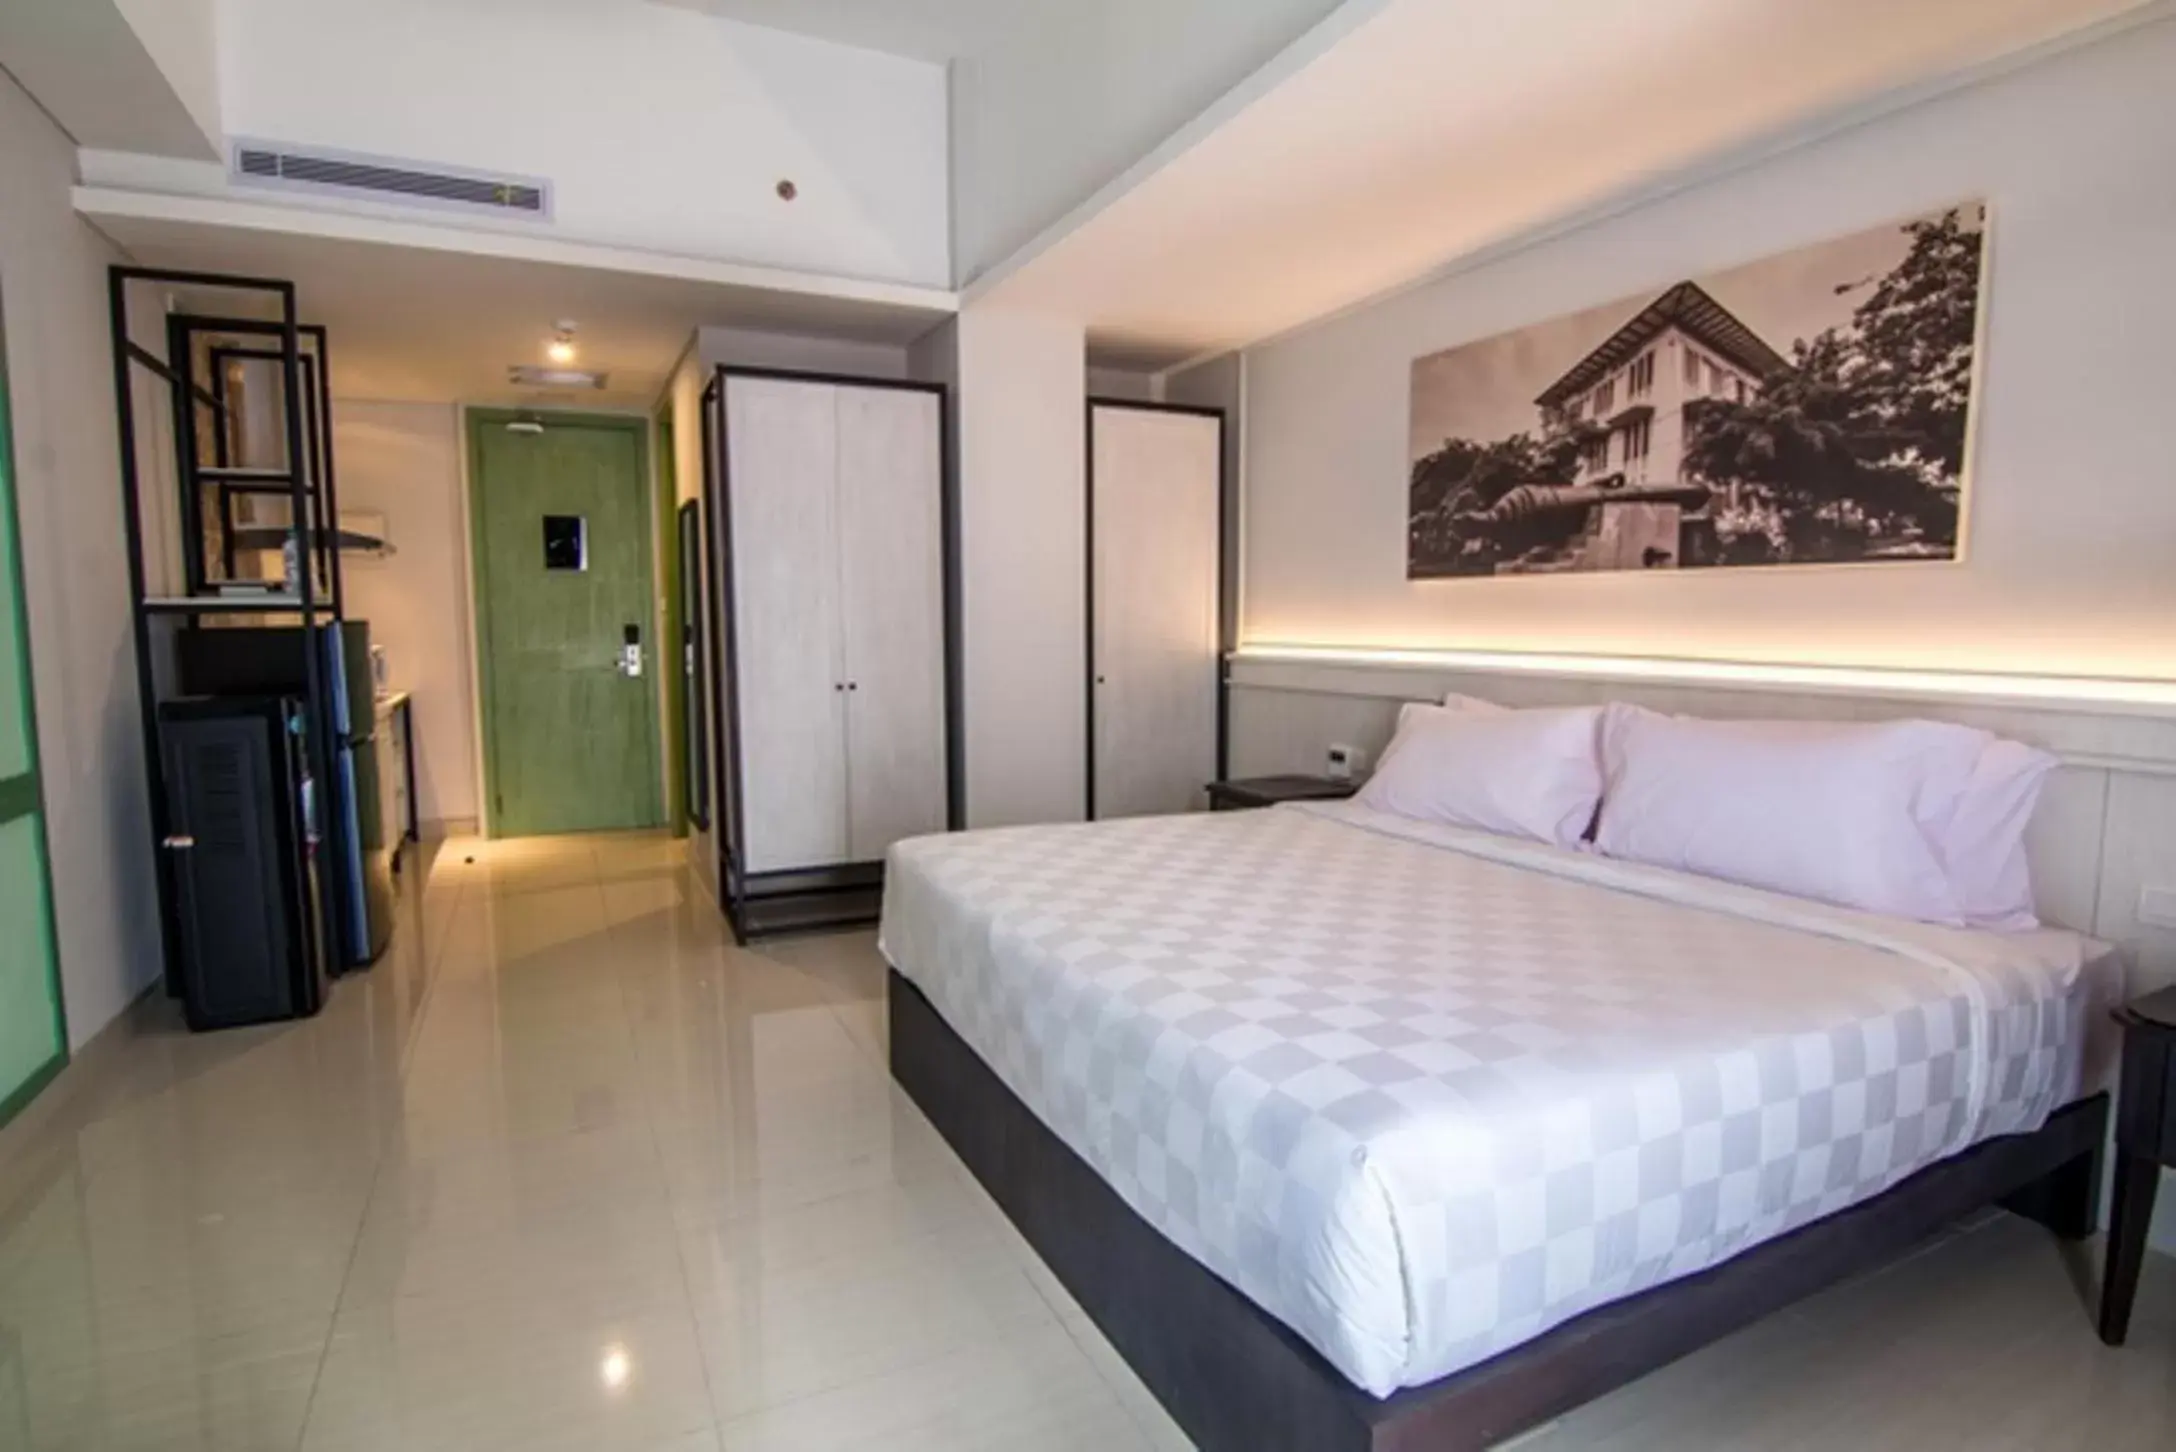 Bedroom in Jambuluwuk Thamrin Hotel